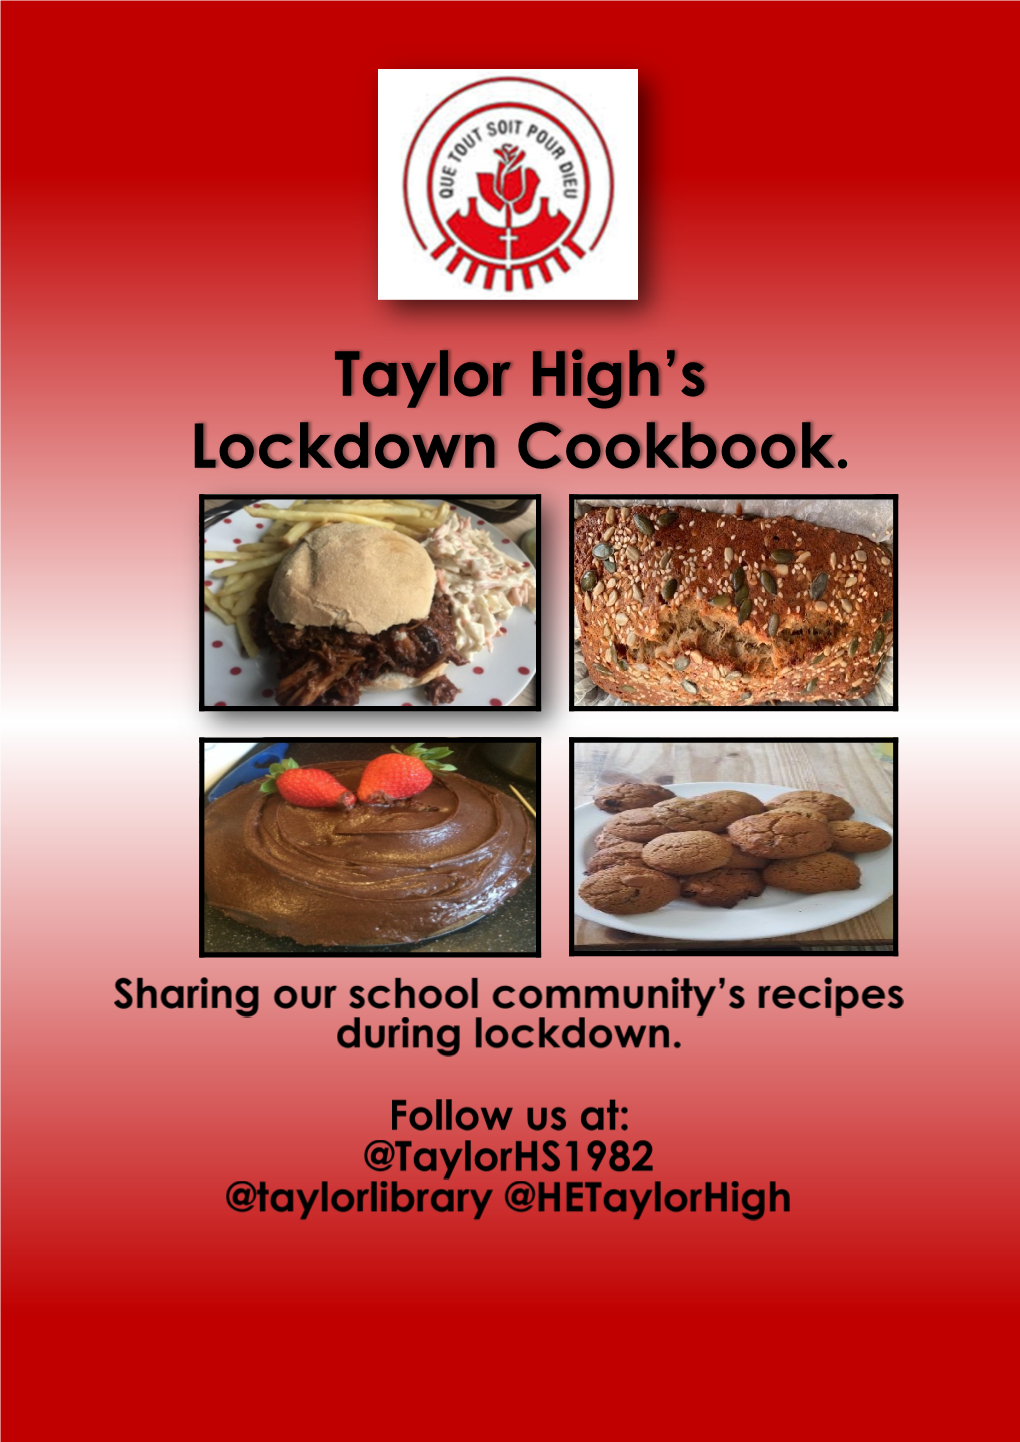 Taylor High's Lockdown Cookbook